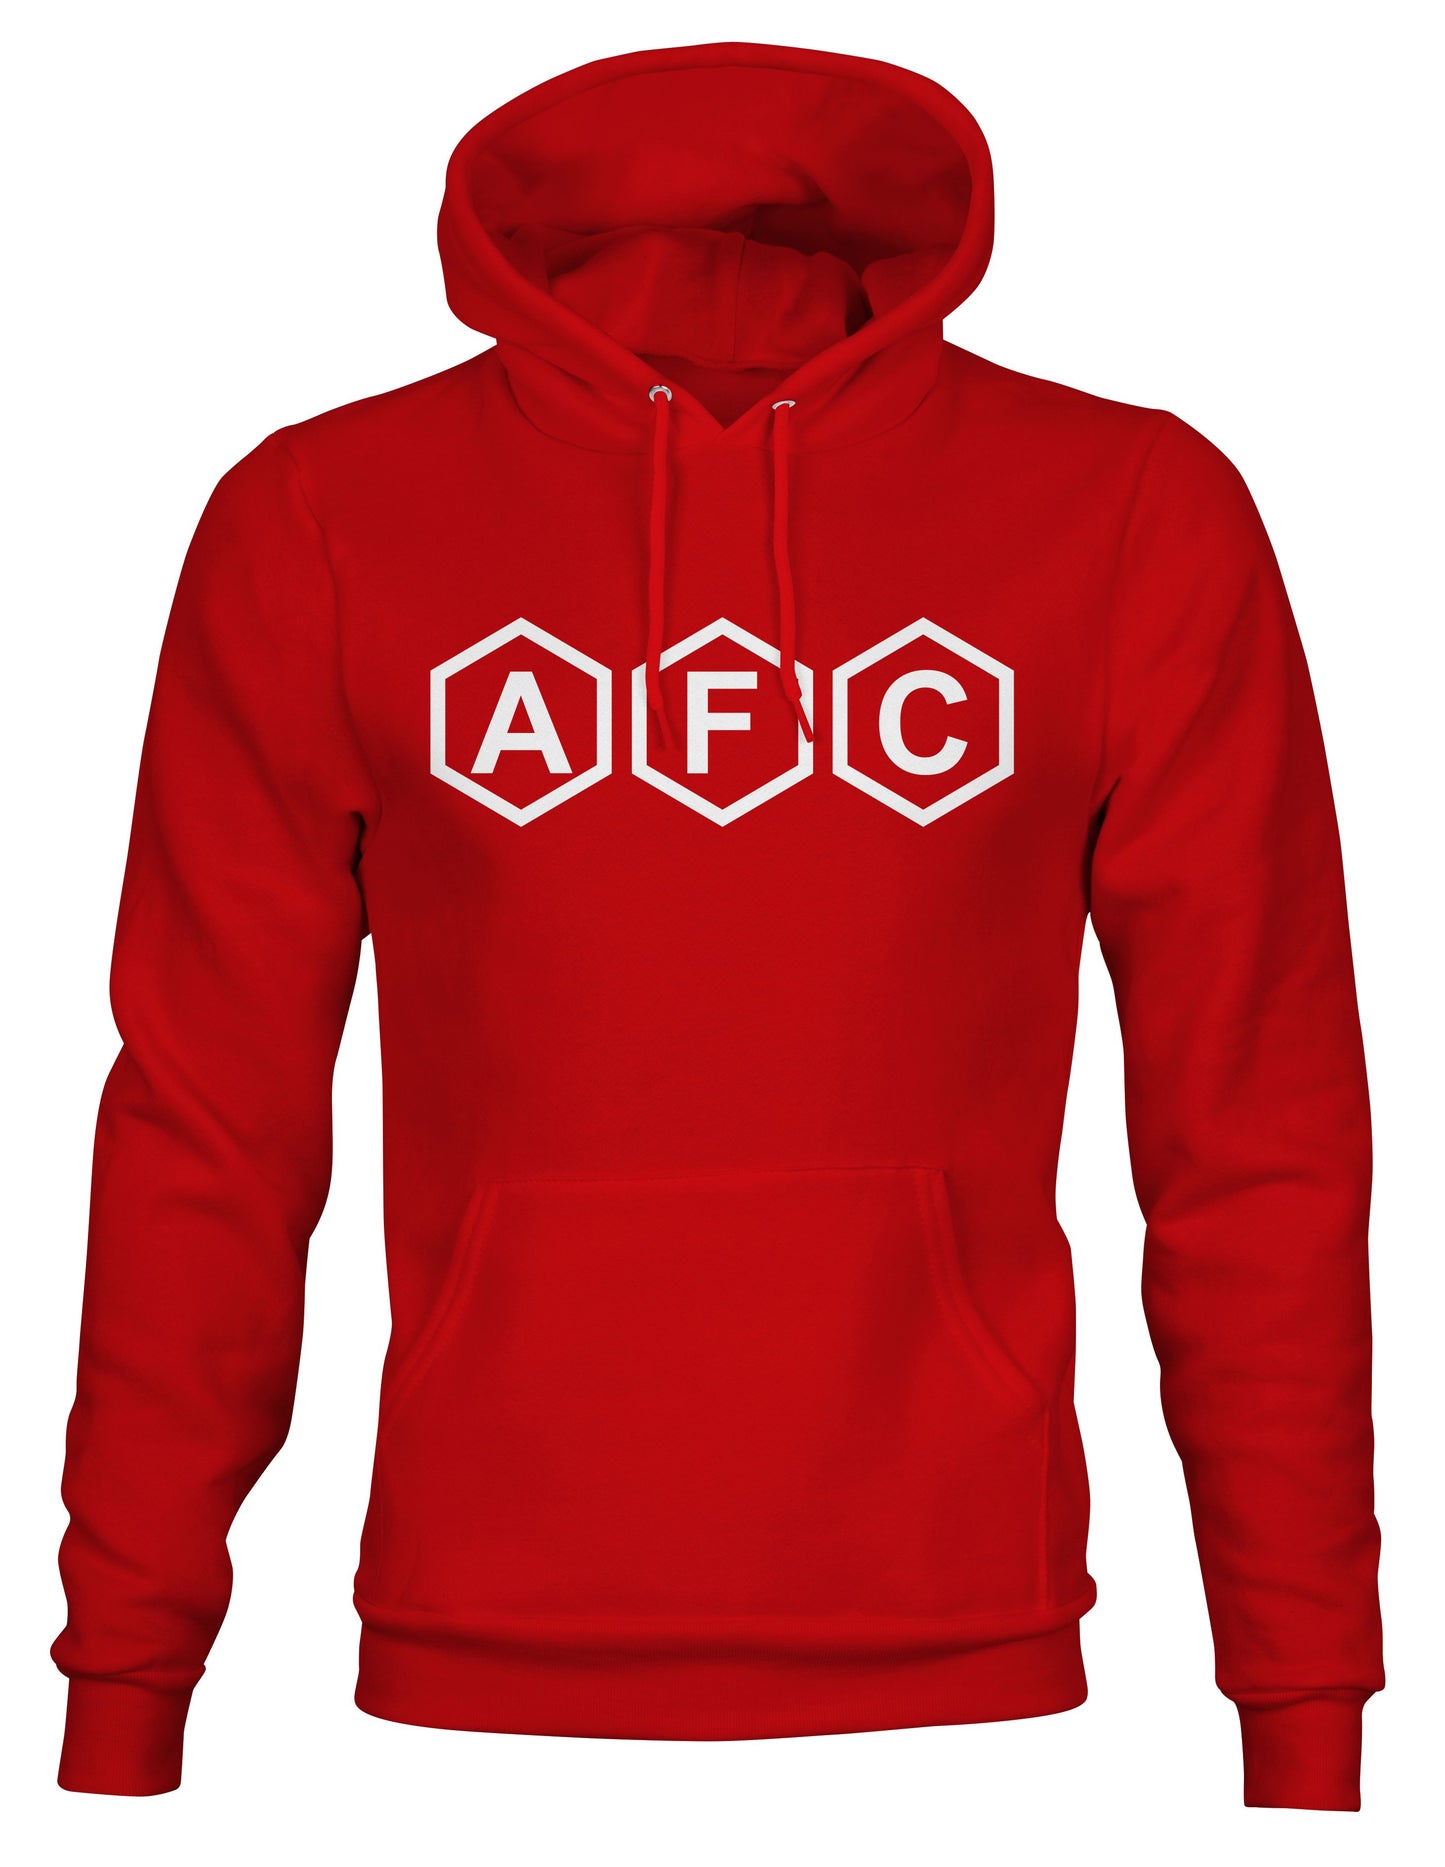 AFC Hoodies (Various colours)